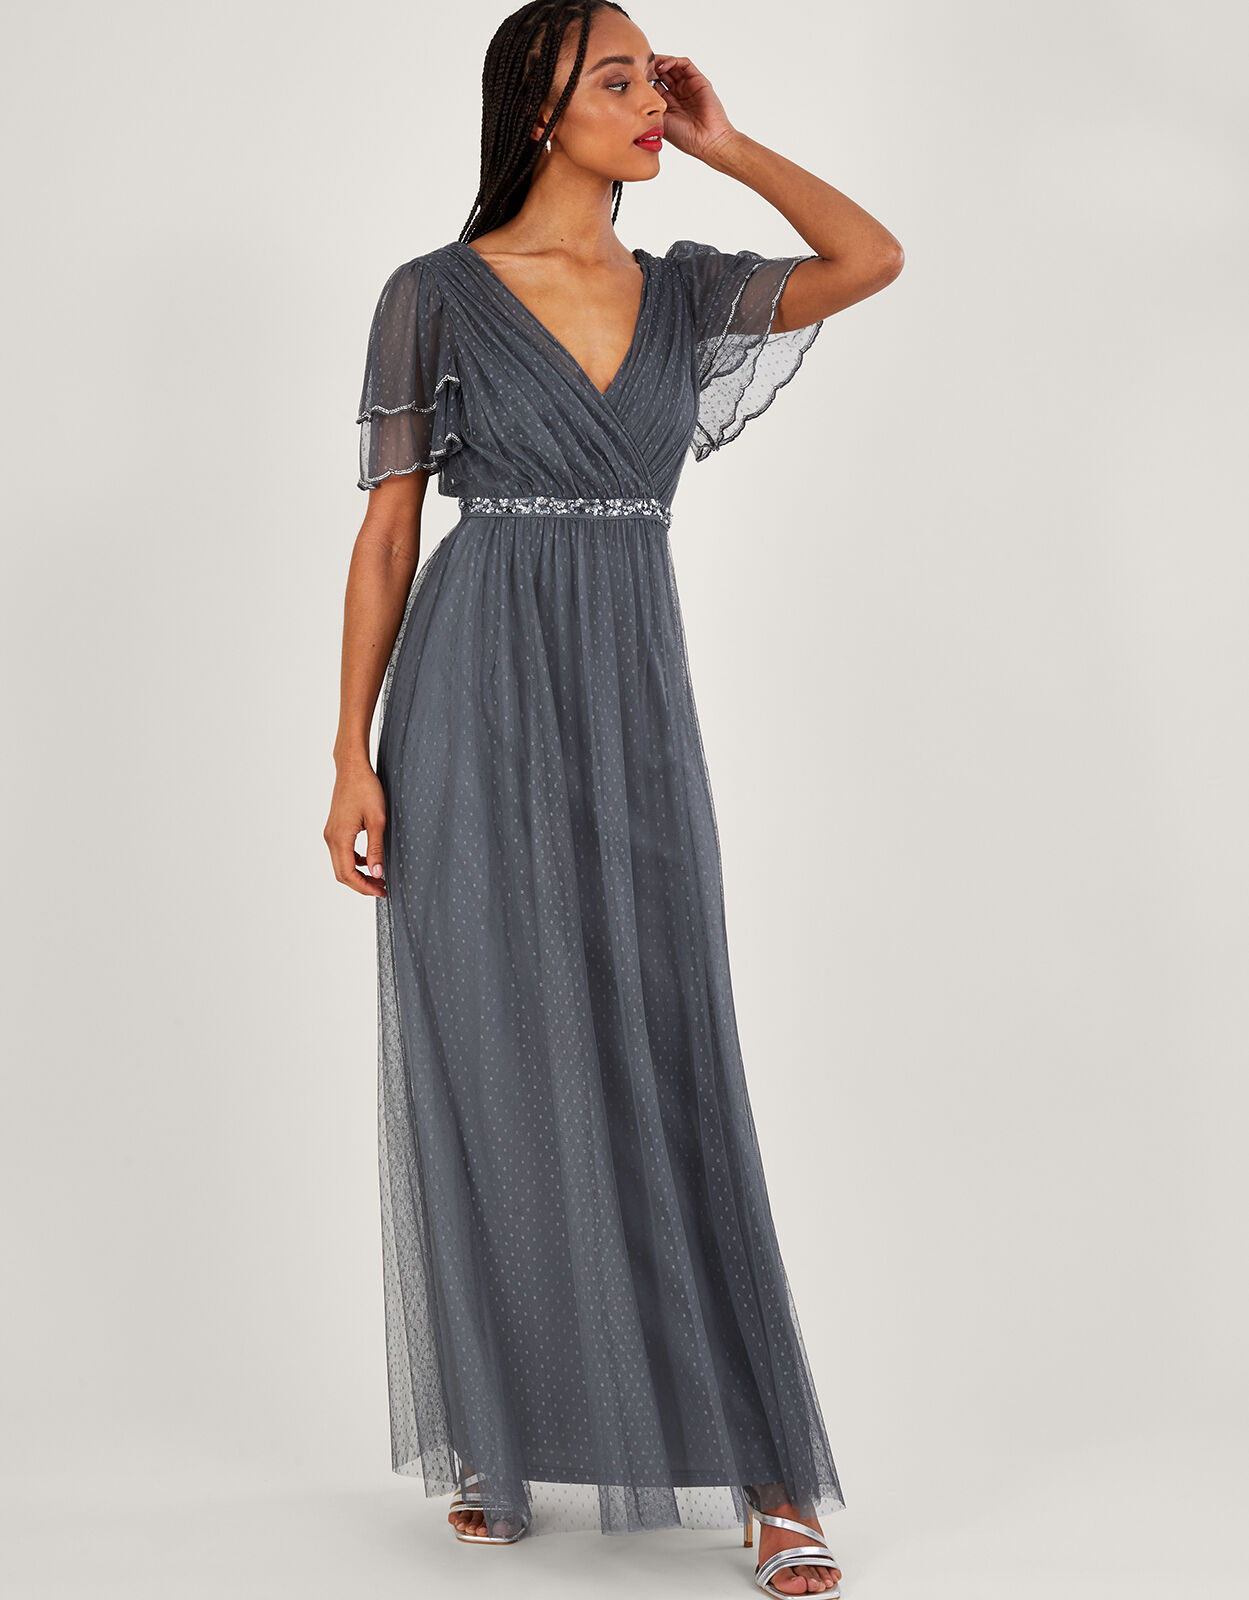 Burgundy Long Prom Dress Pockets Sleeveless Formal Dress with Appliques  DTP80 – DressTok.co.uk